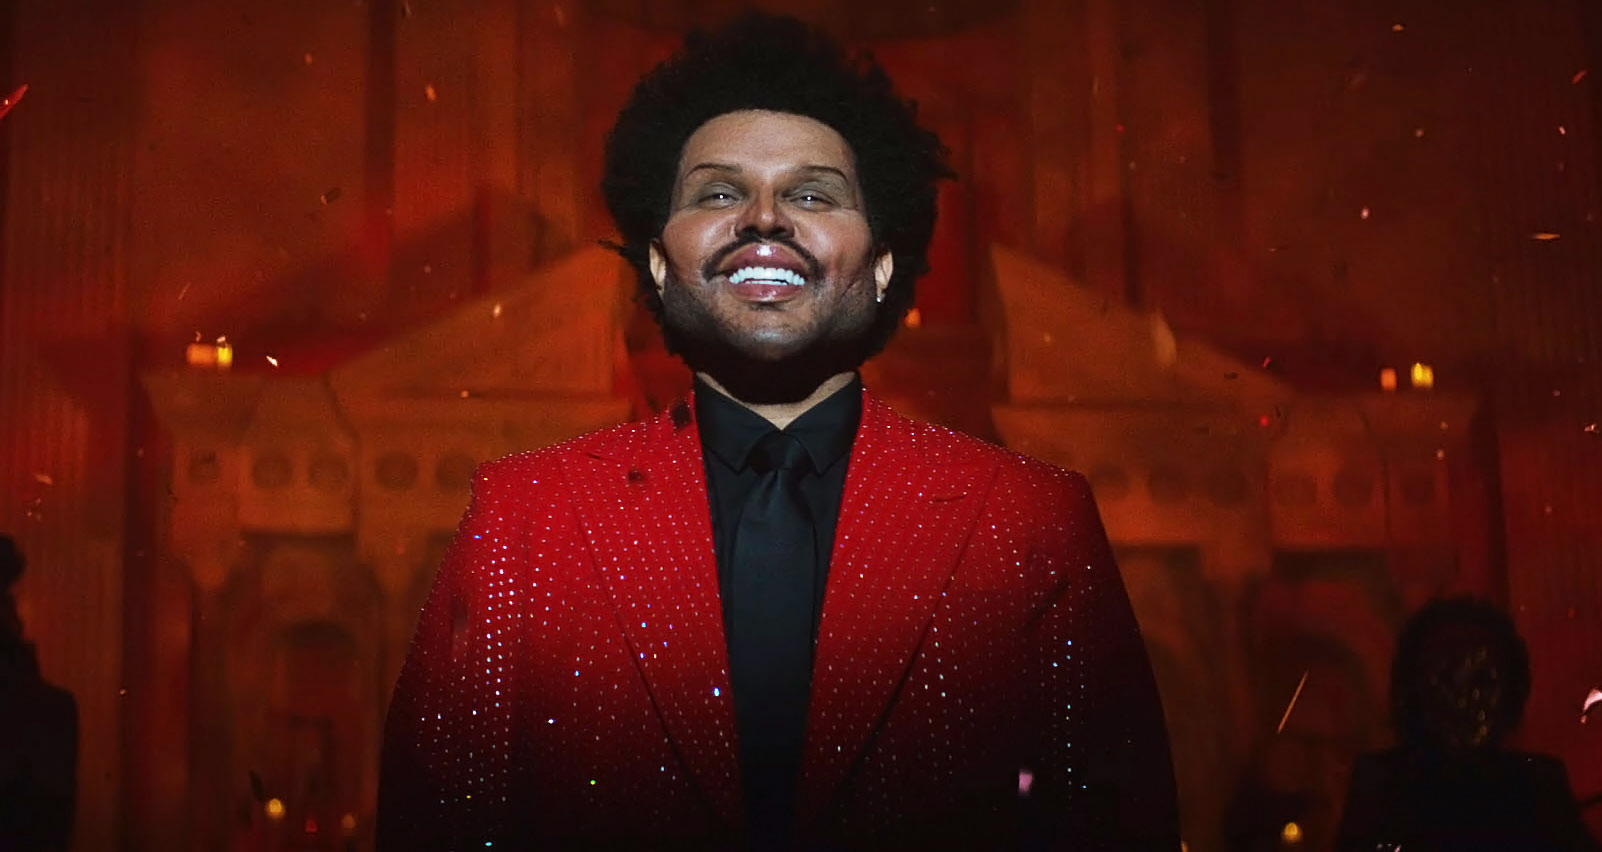 Earning it the weekend. The Weeknd 2021. The Weeknd певец 2021. The Weeknd фото 2021. The Weeknd 2021 пластика.